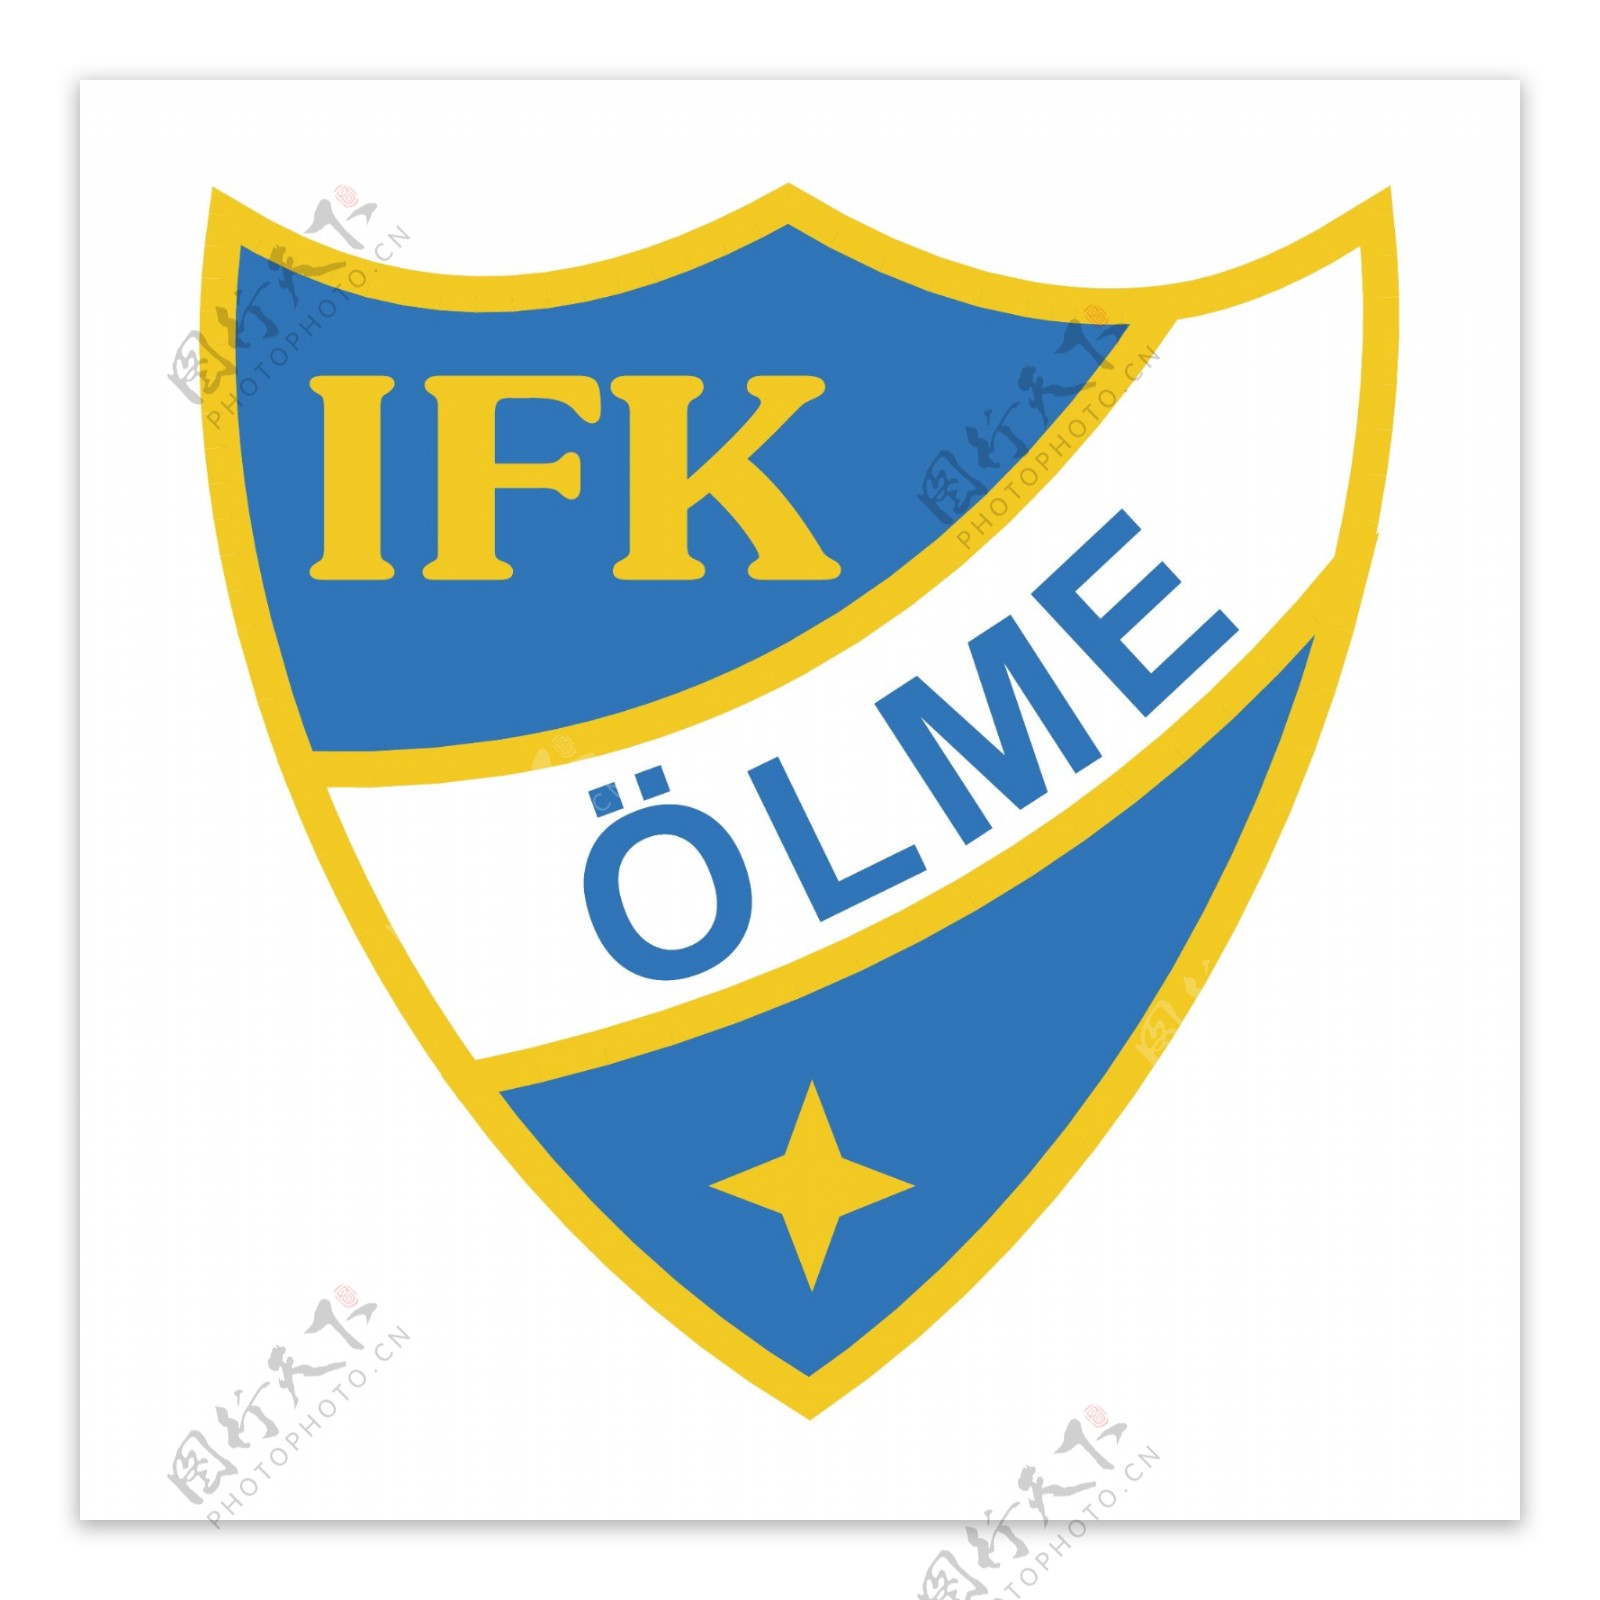 IFK奥尔梅